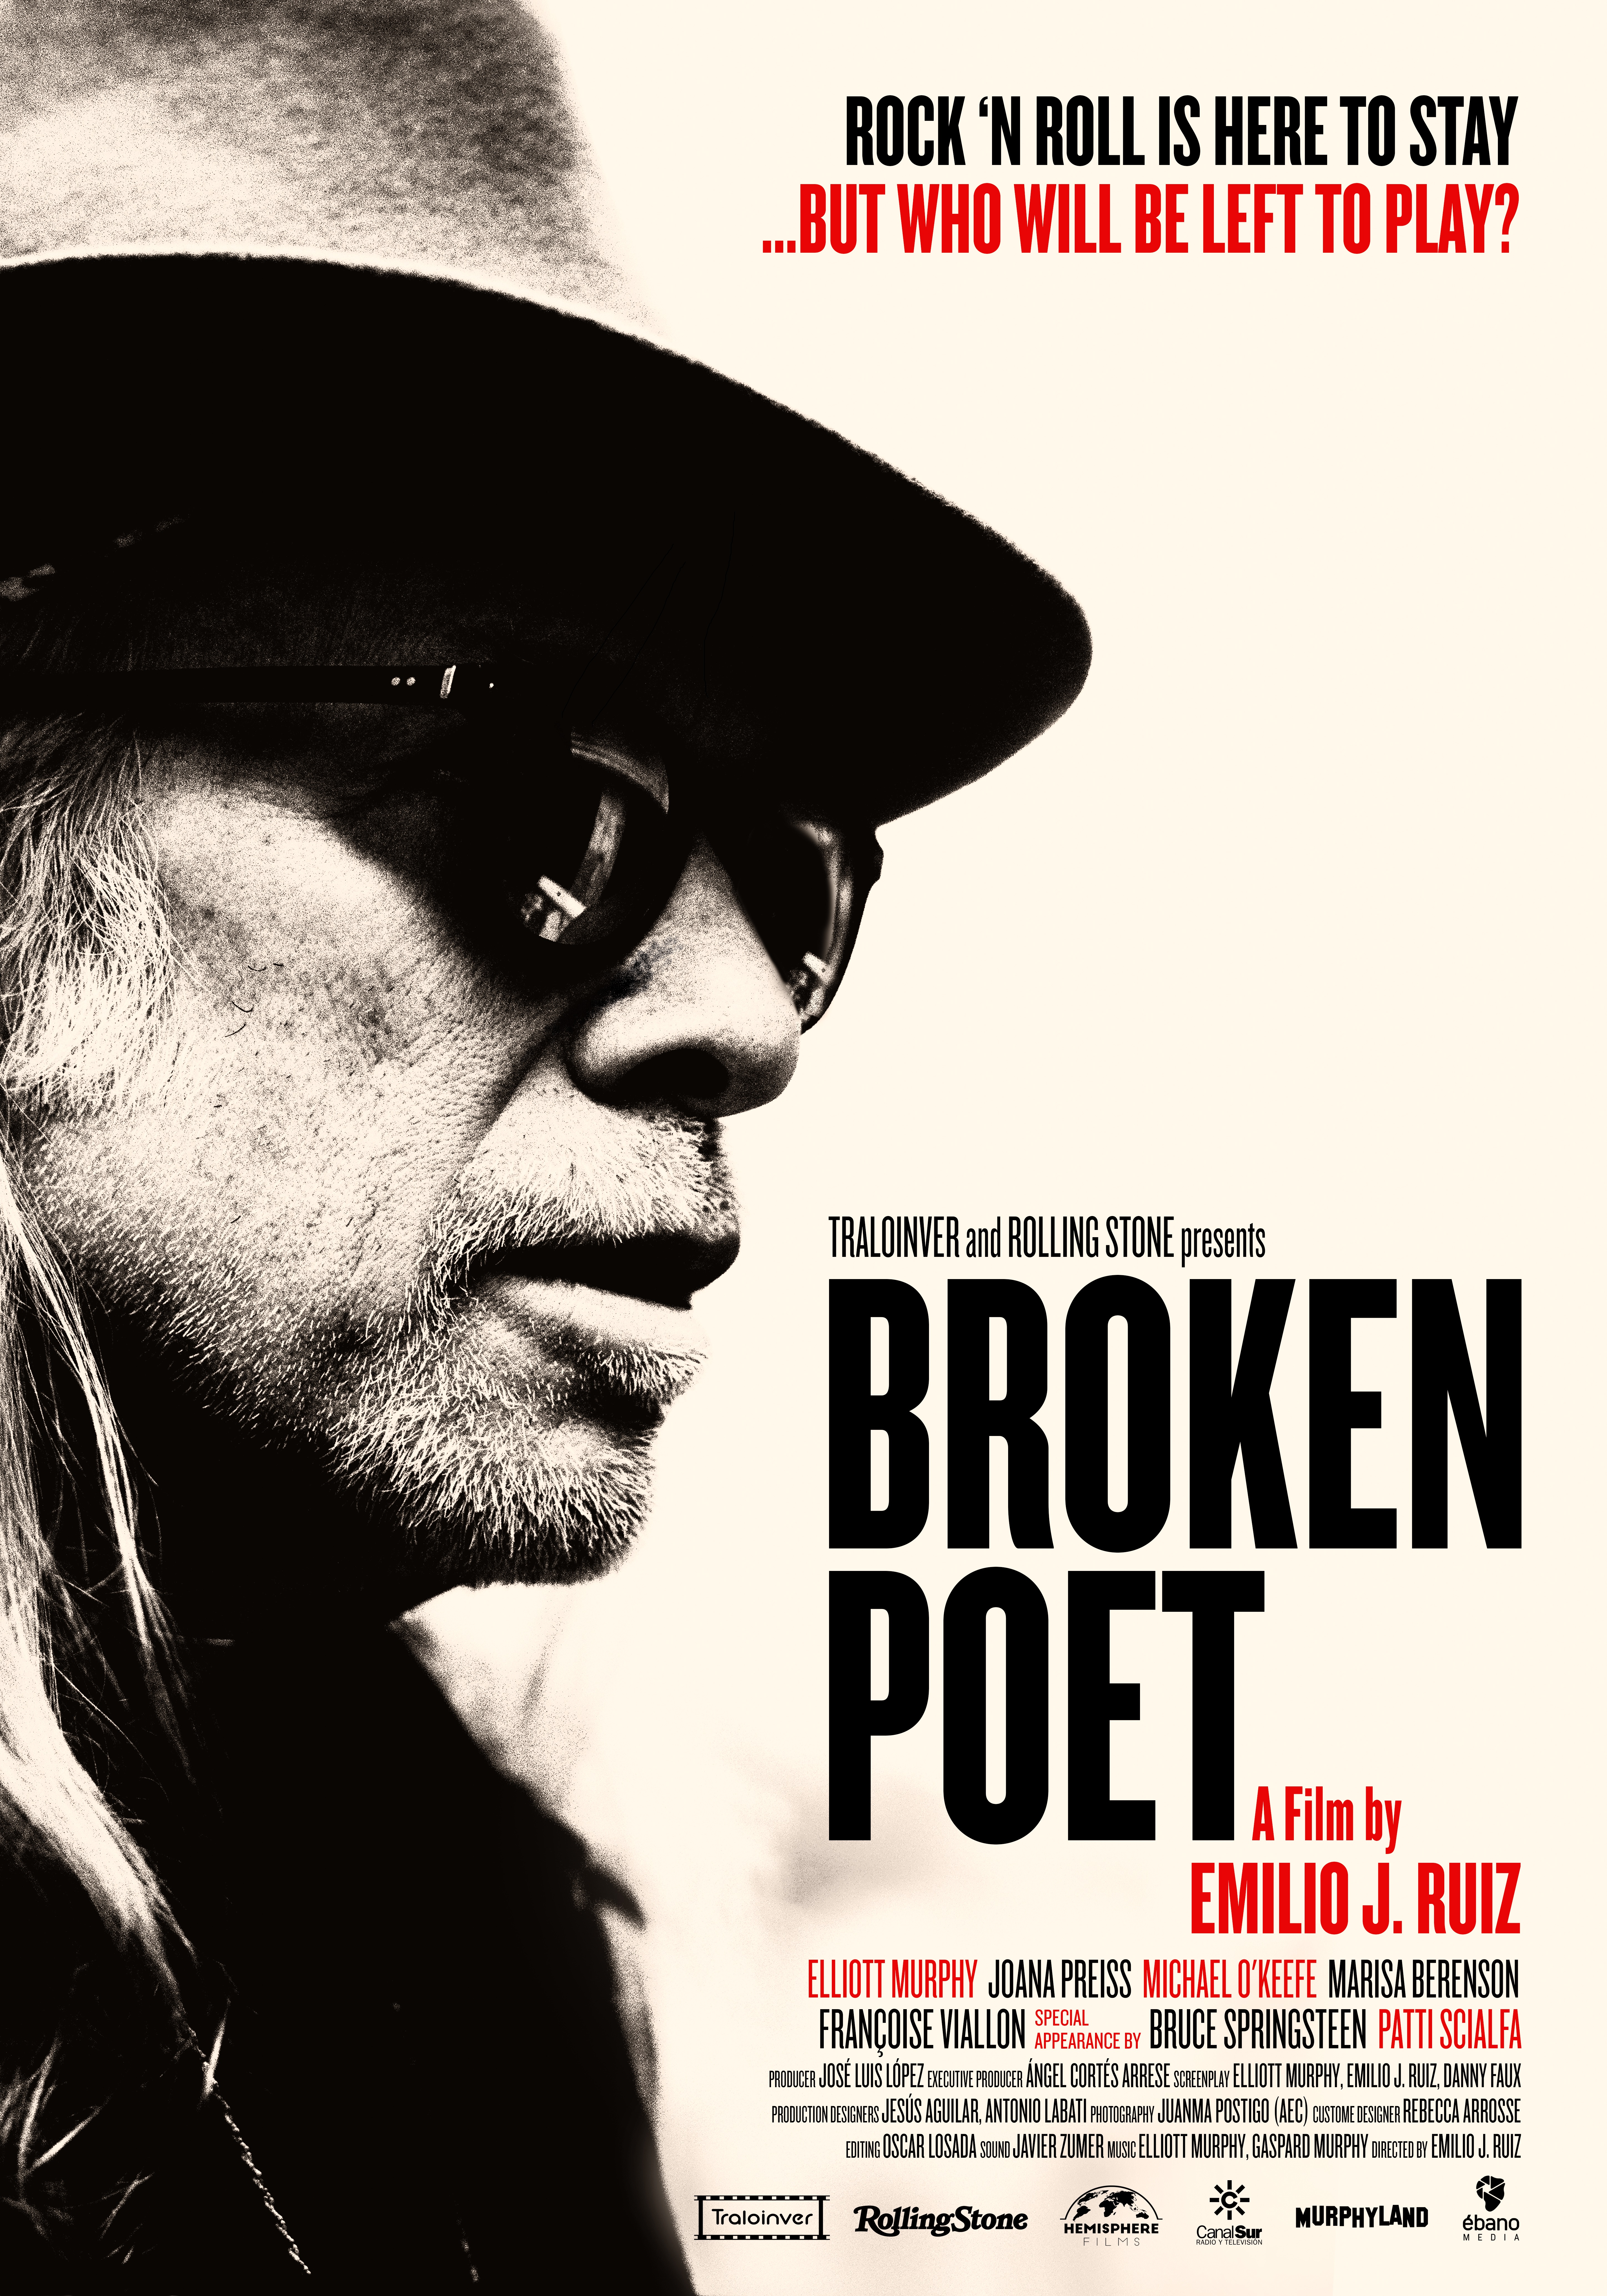 Nonton film Broken Poet layarkaca21 indoxx1 ganool online streaming terbaru